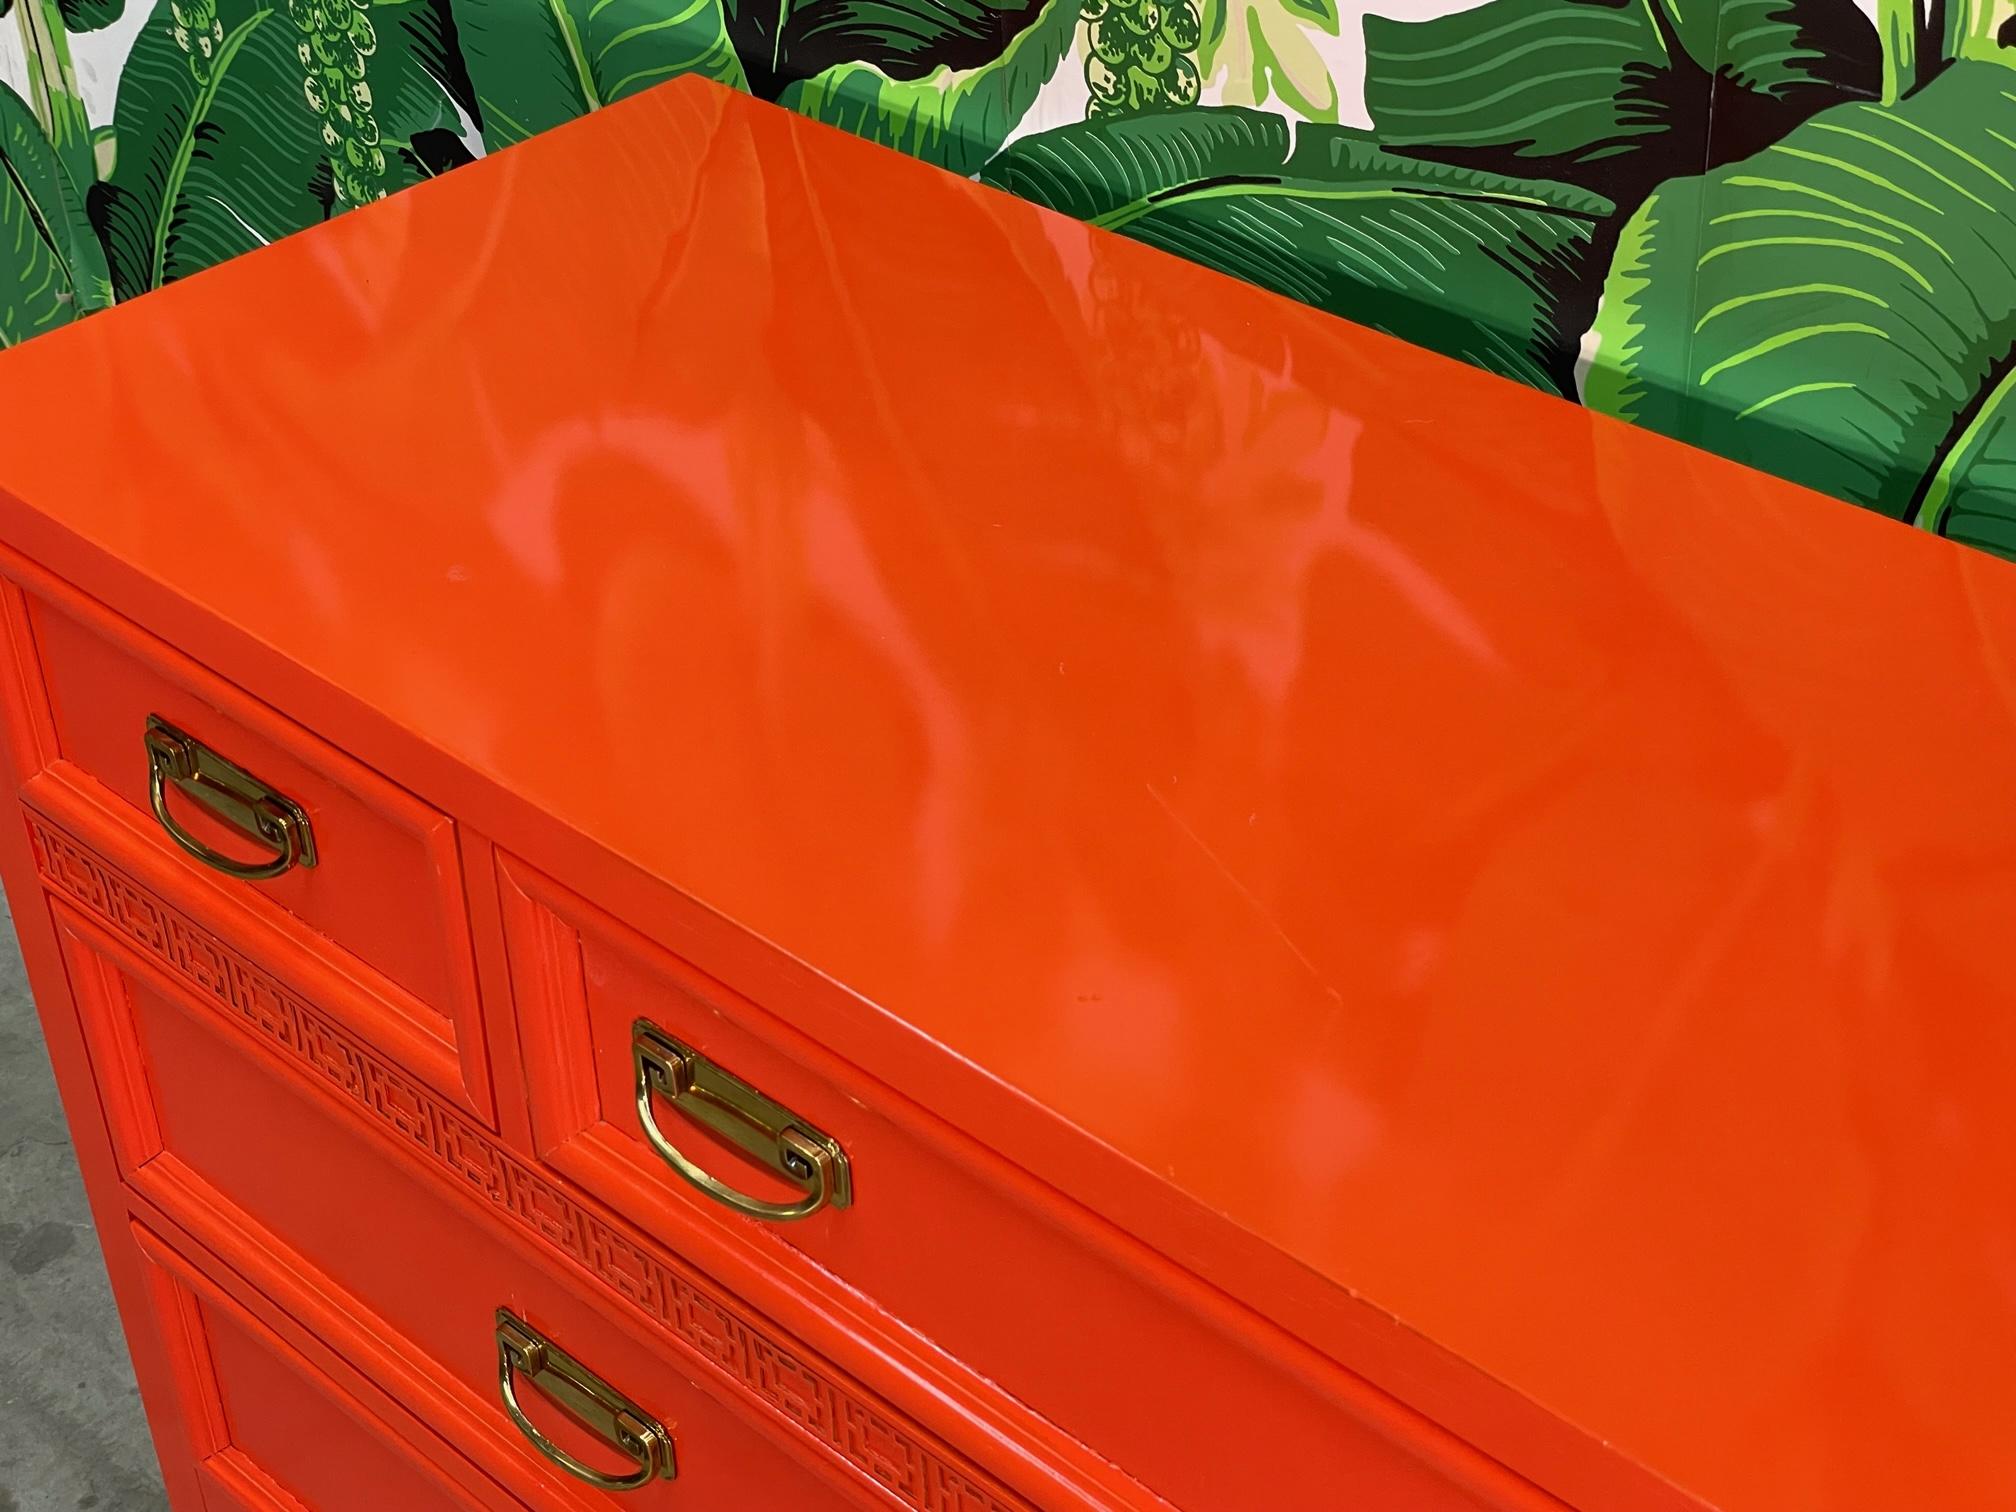 Asian Chinoiserie Dresser in Hermes Orange Lacquer 3